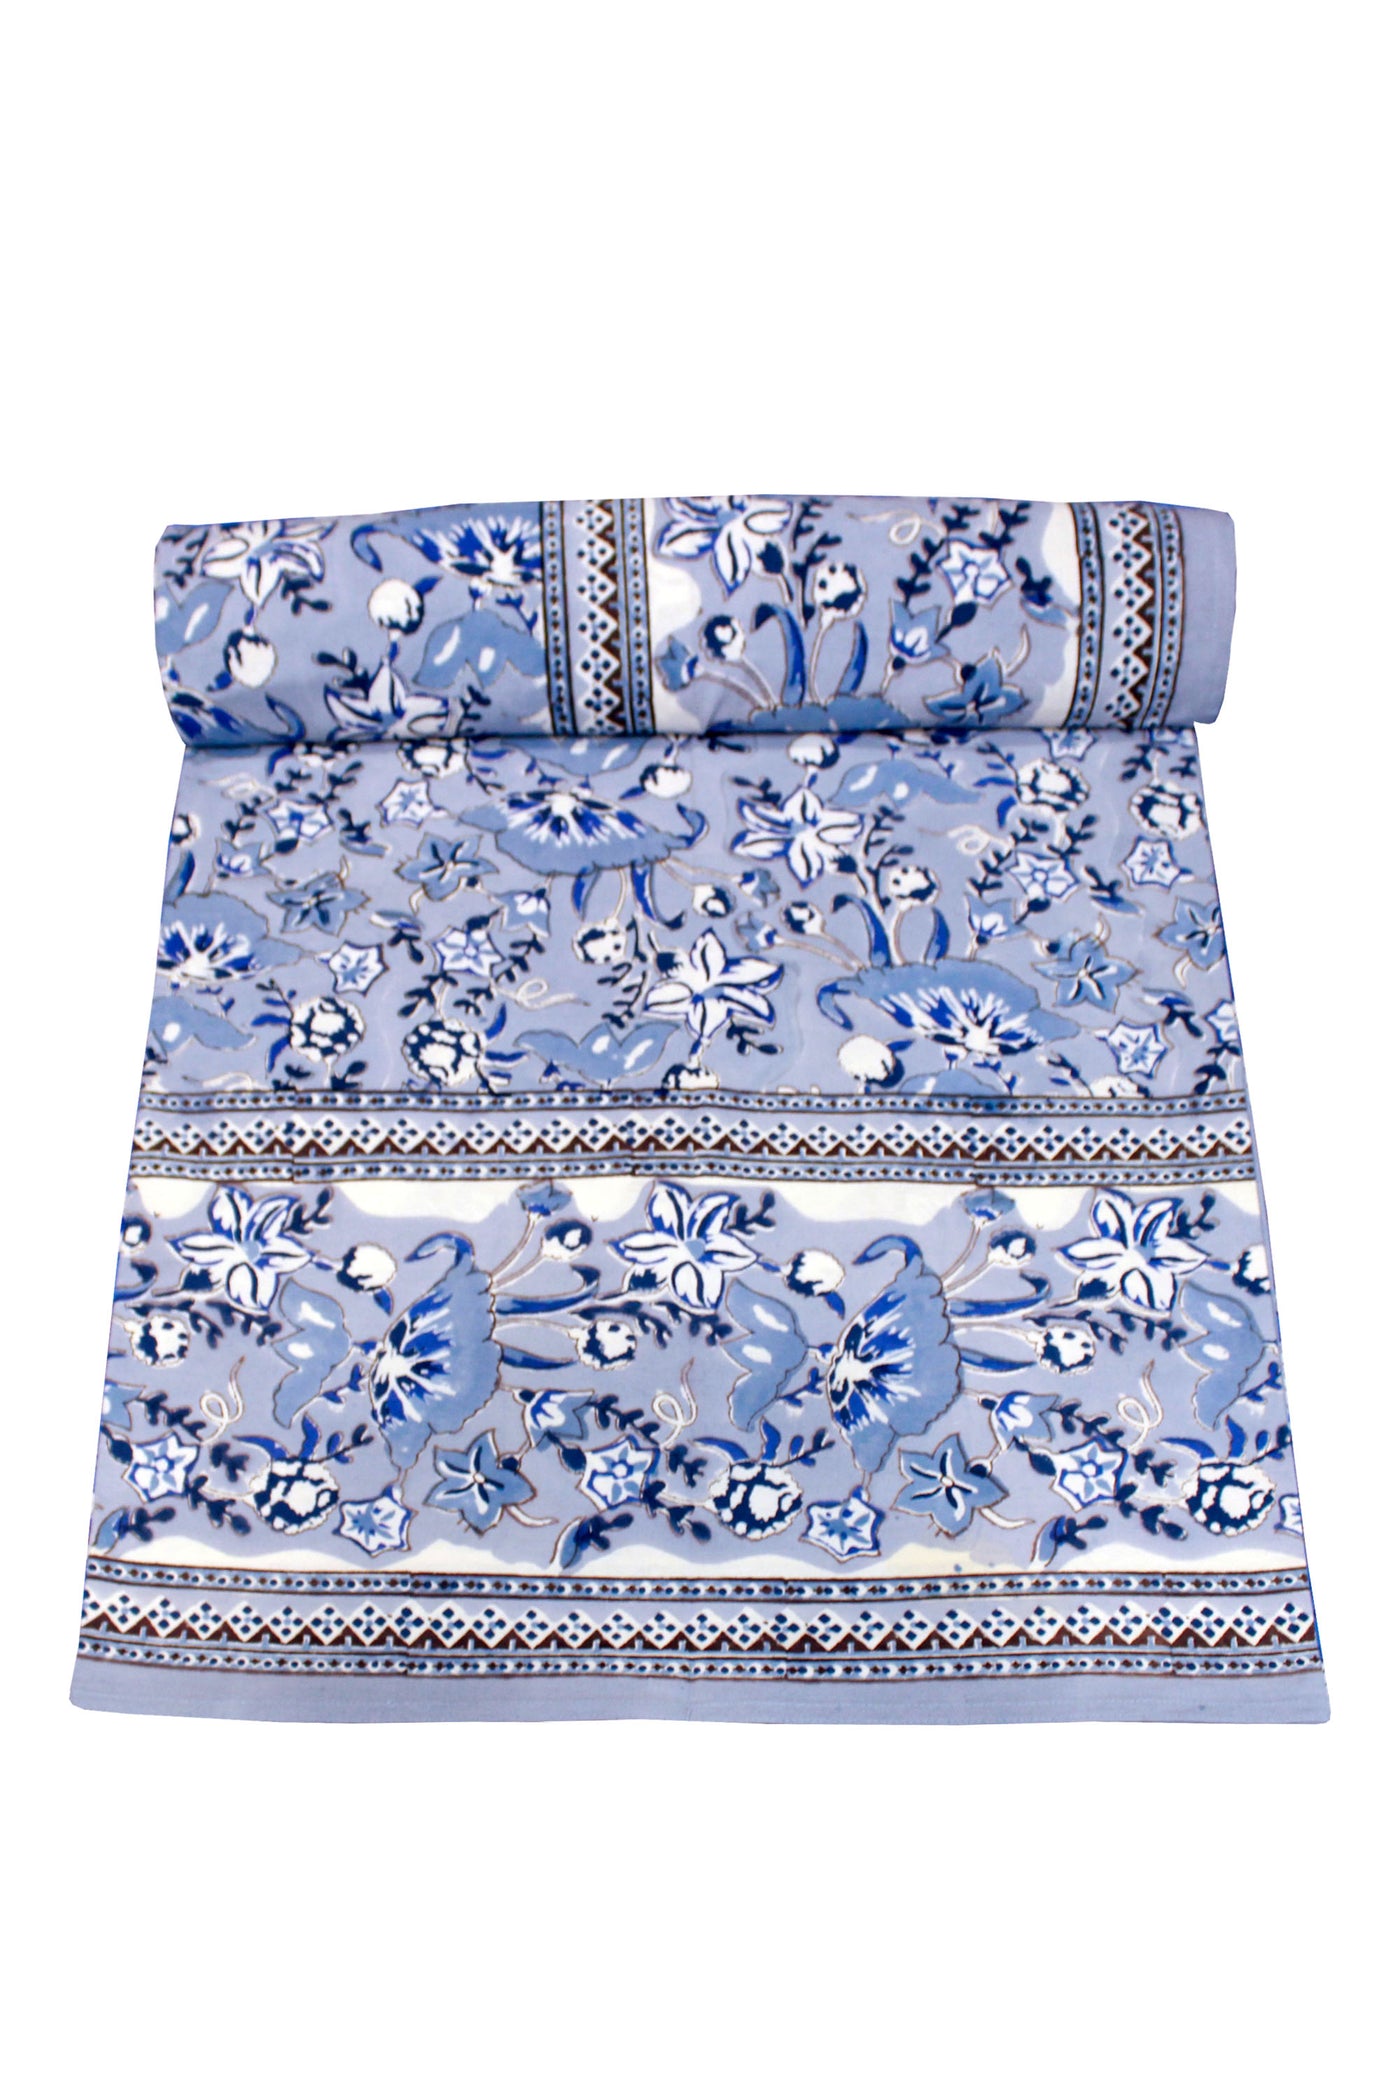 Cotton Lotus Flower Jaal Hand Block Print  Bedsheet in Powder Blue